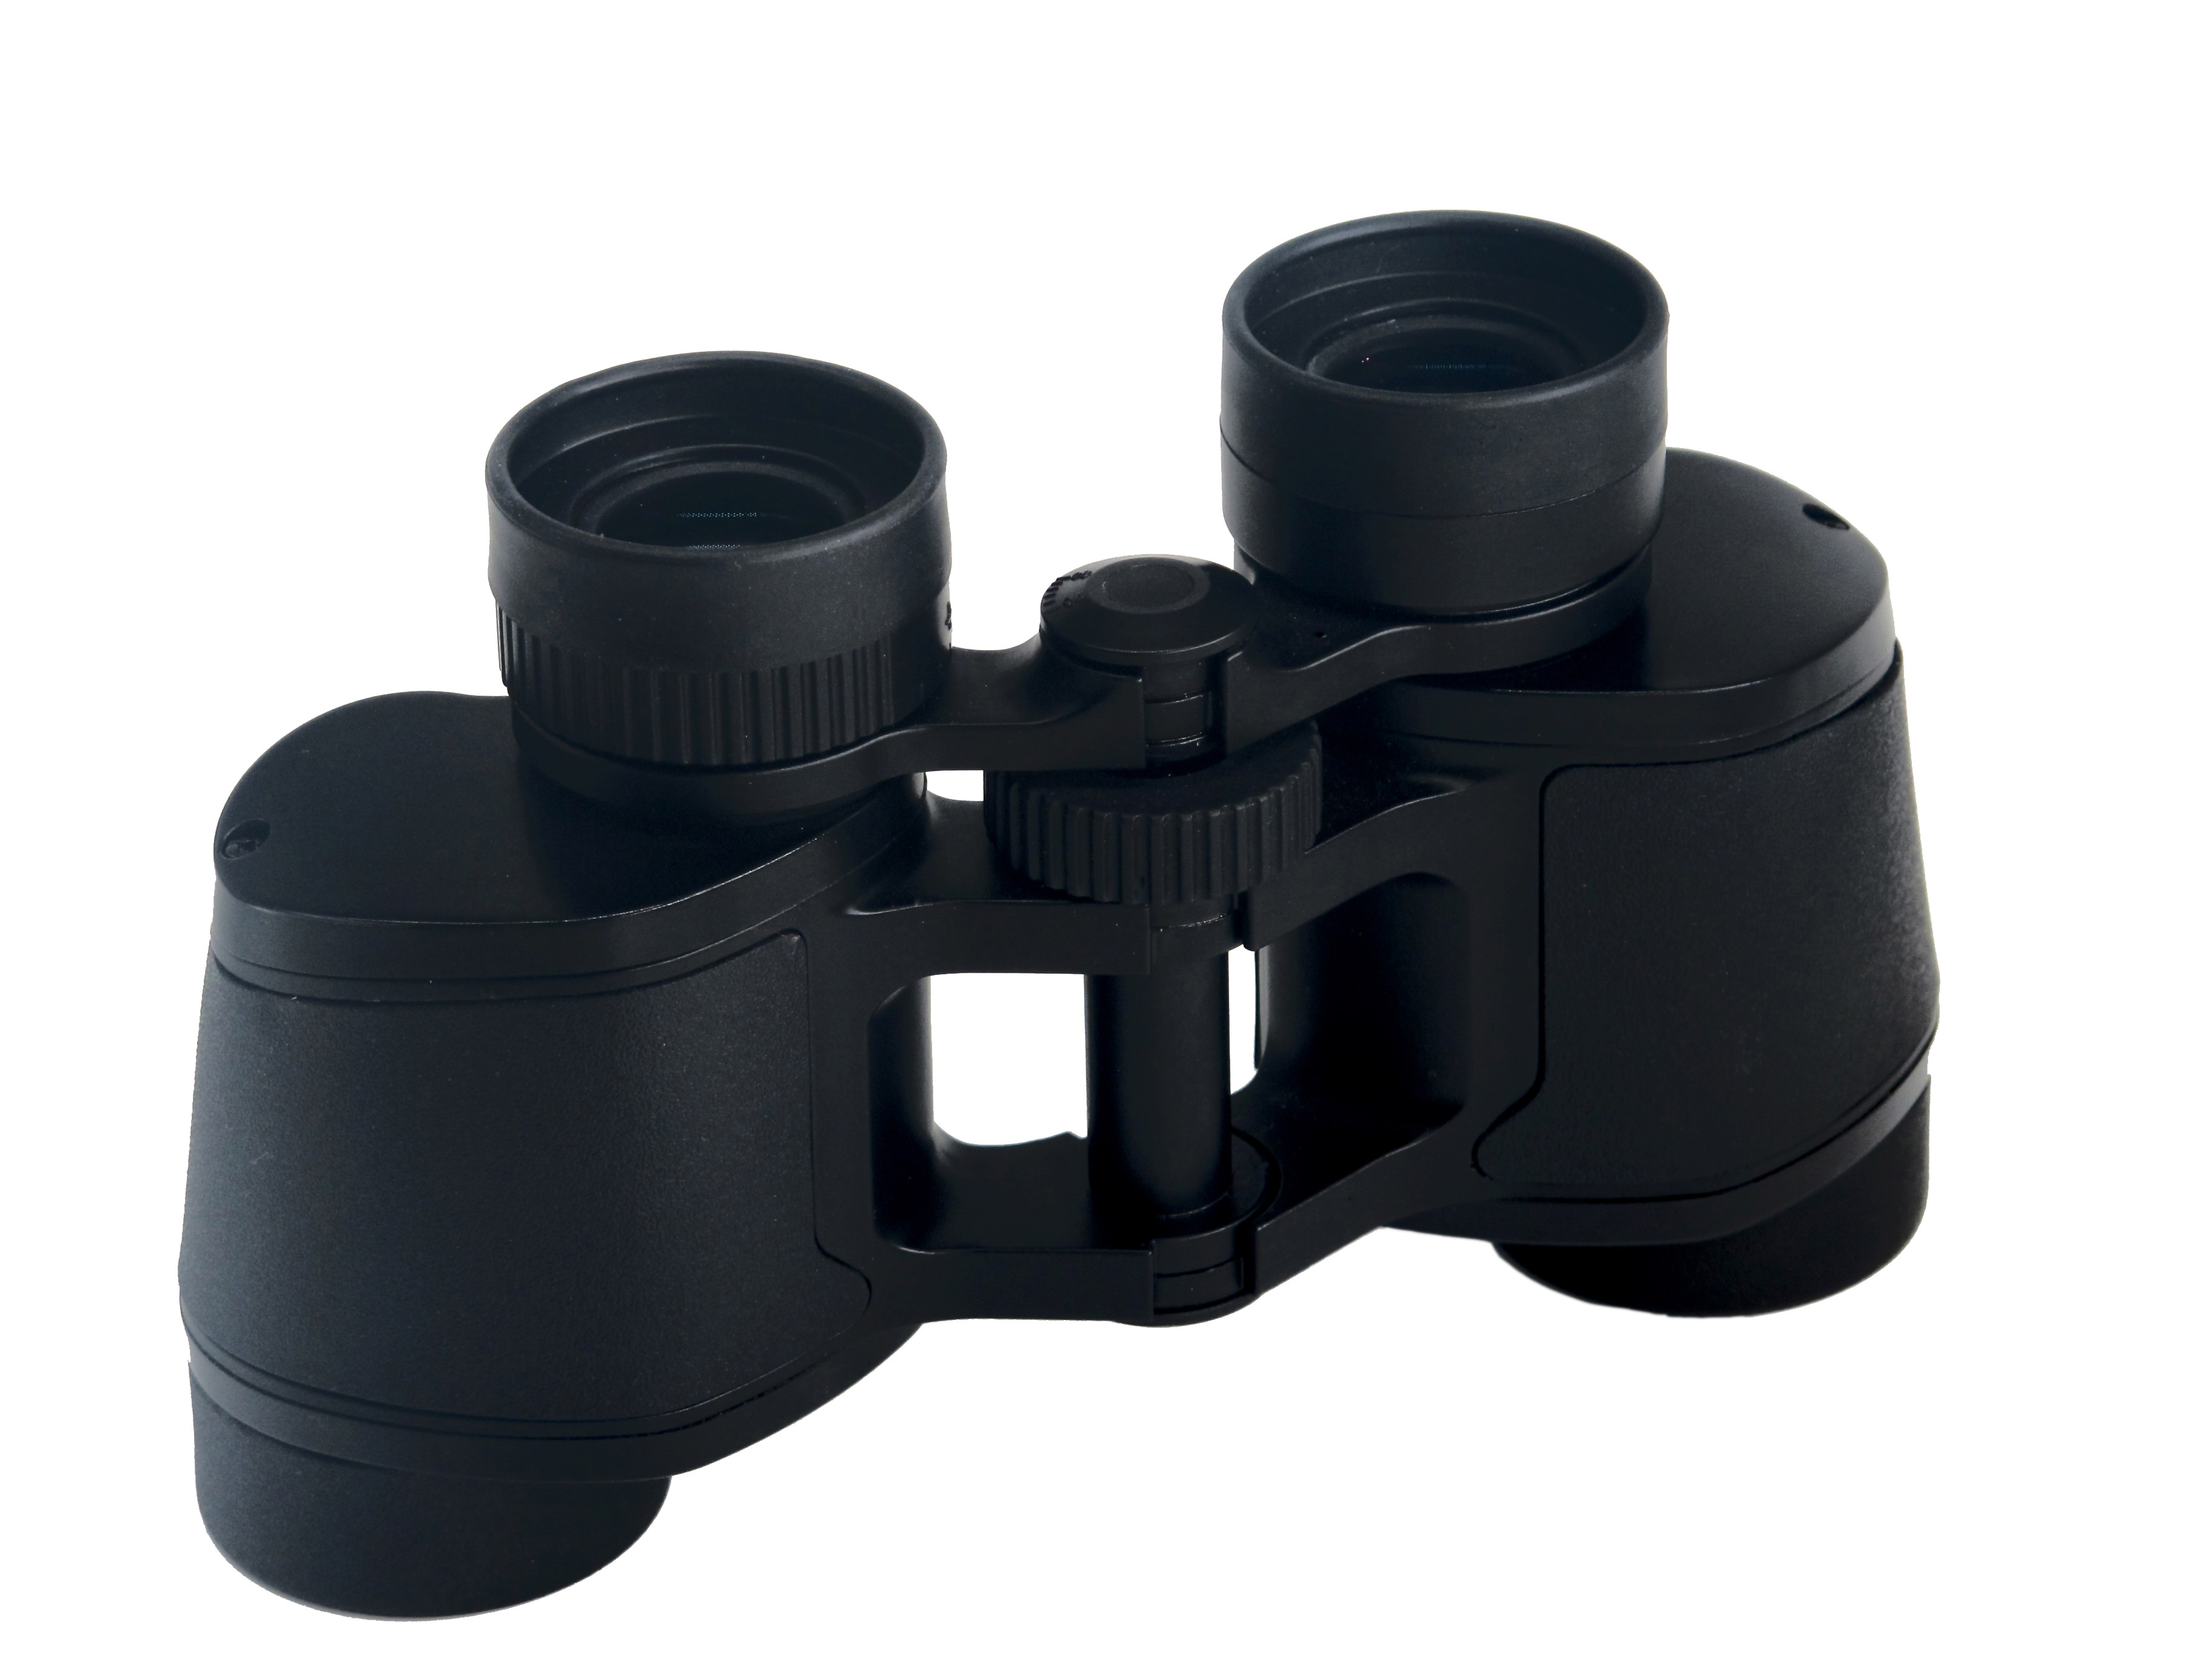 KXES3 6.5/8x32 & 8/10x42 & 10/12x50 Waterproof Binocular